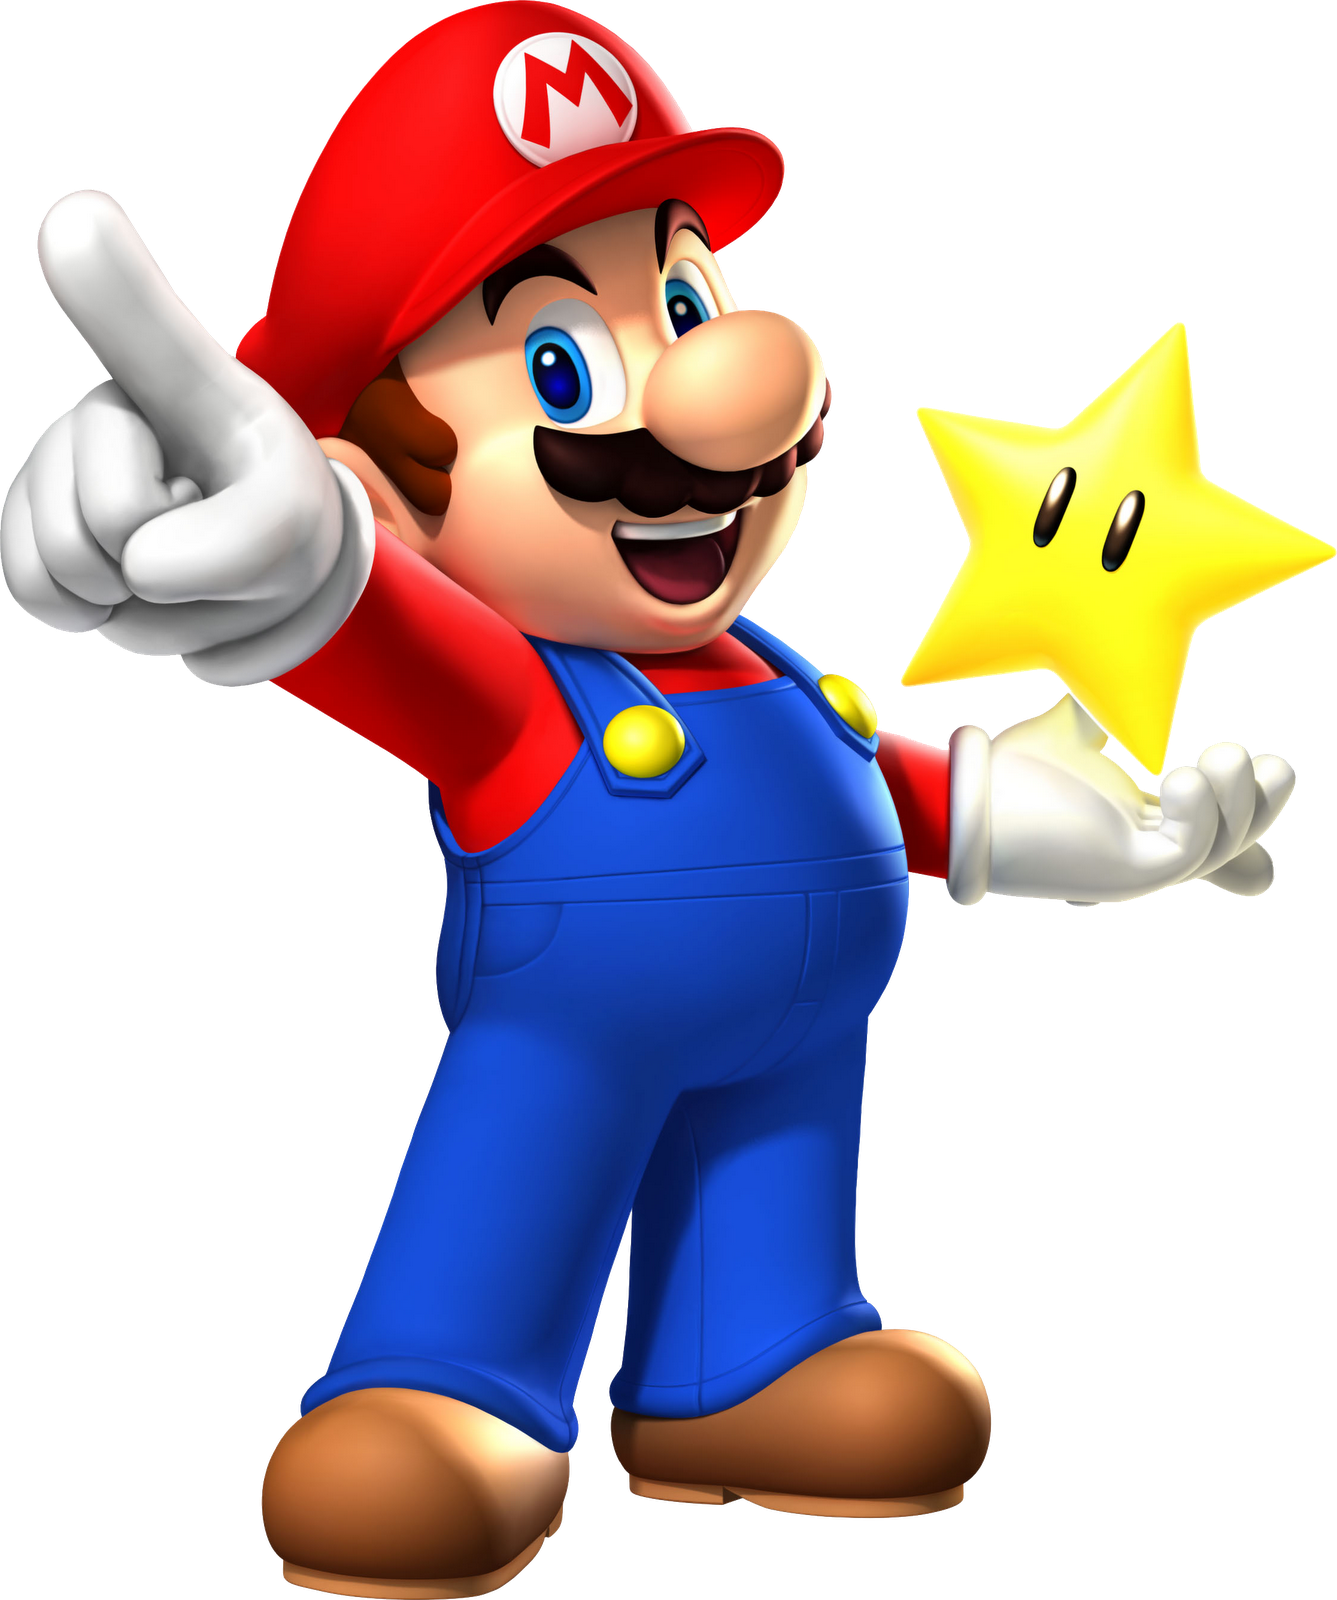 Mario Photos Download Free Image PNG Image